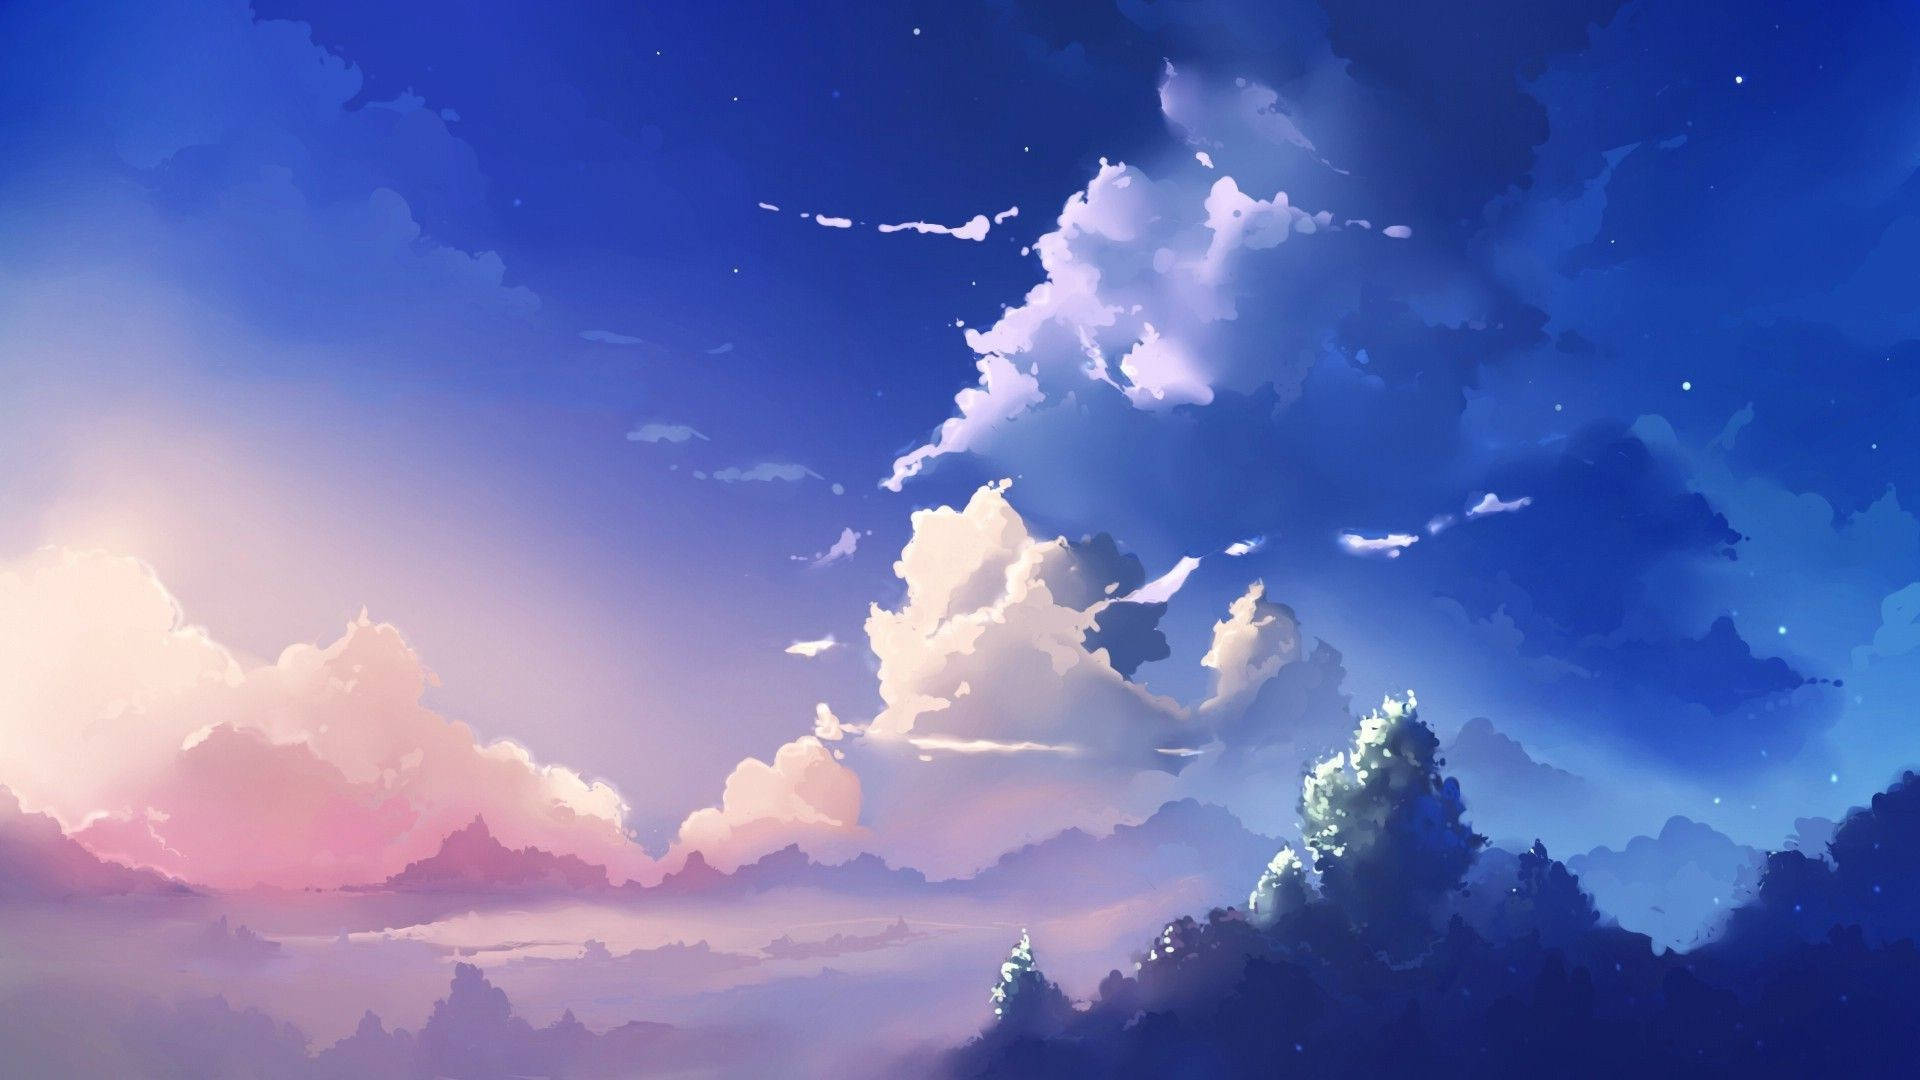 Dreamy Anime Cloud Artwork Background